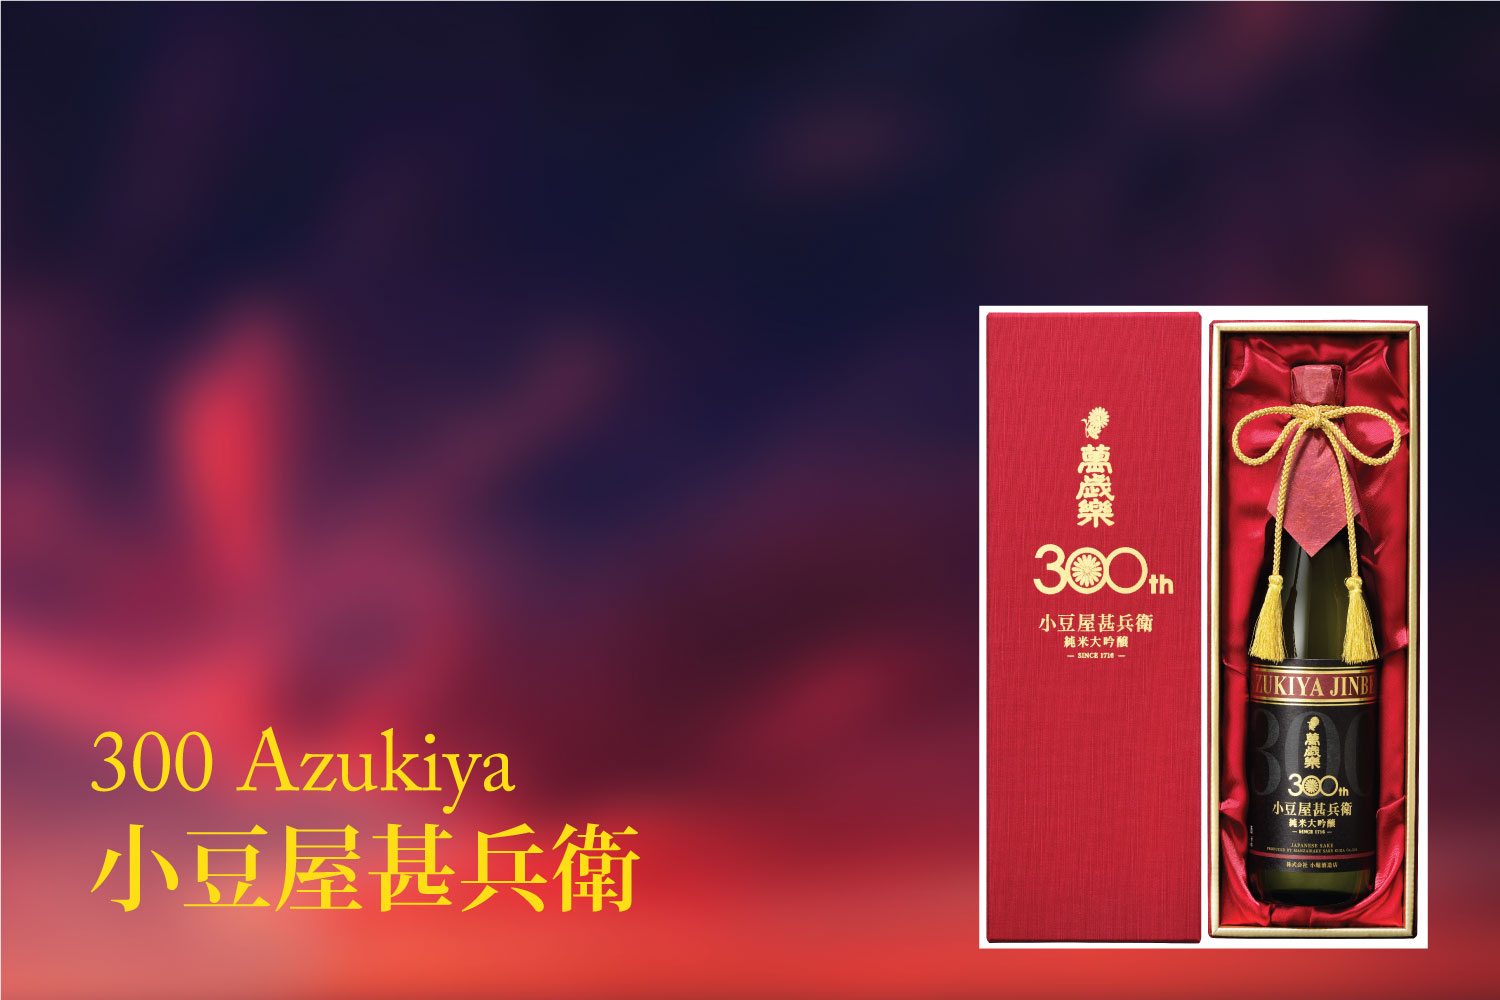 300-azukiya-rare-limited-japanese-sake